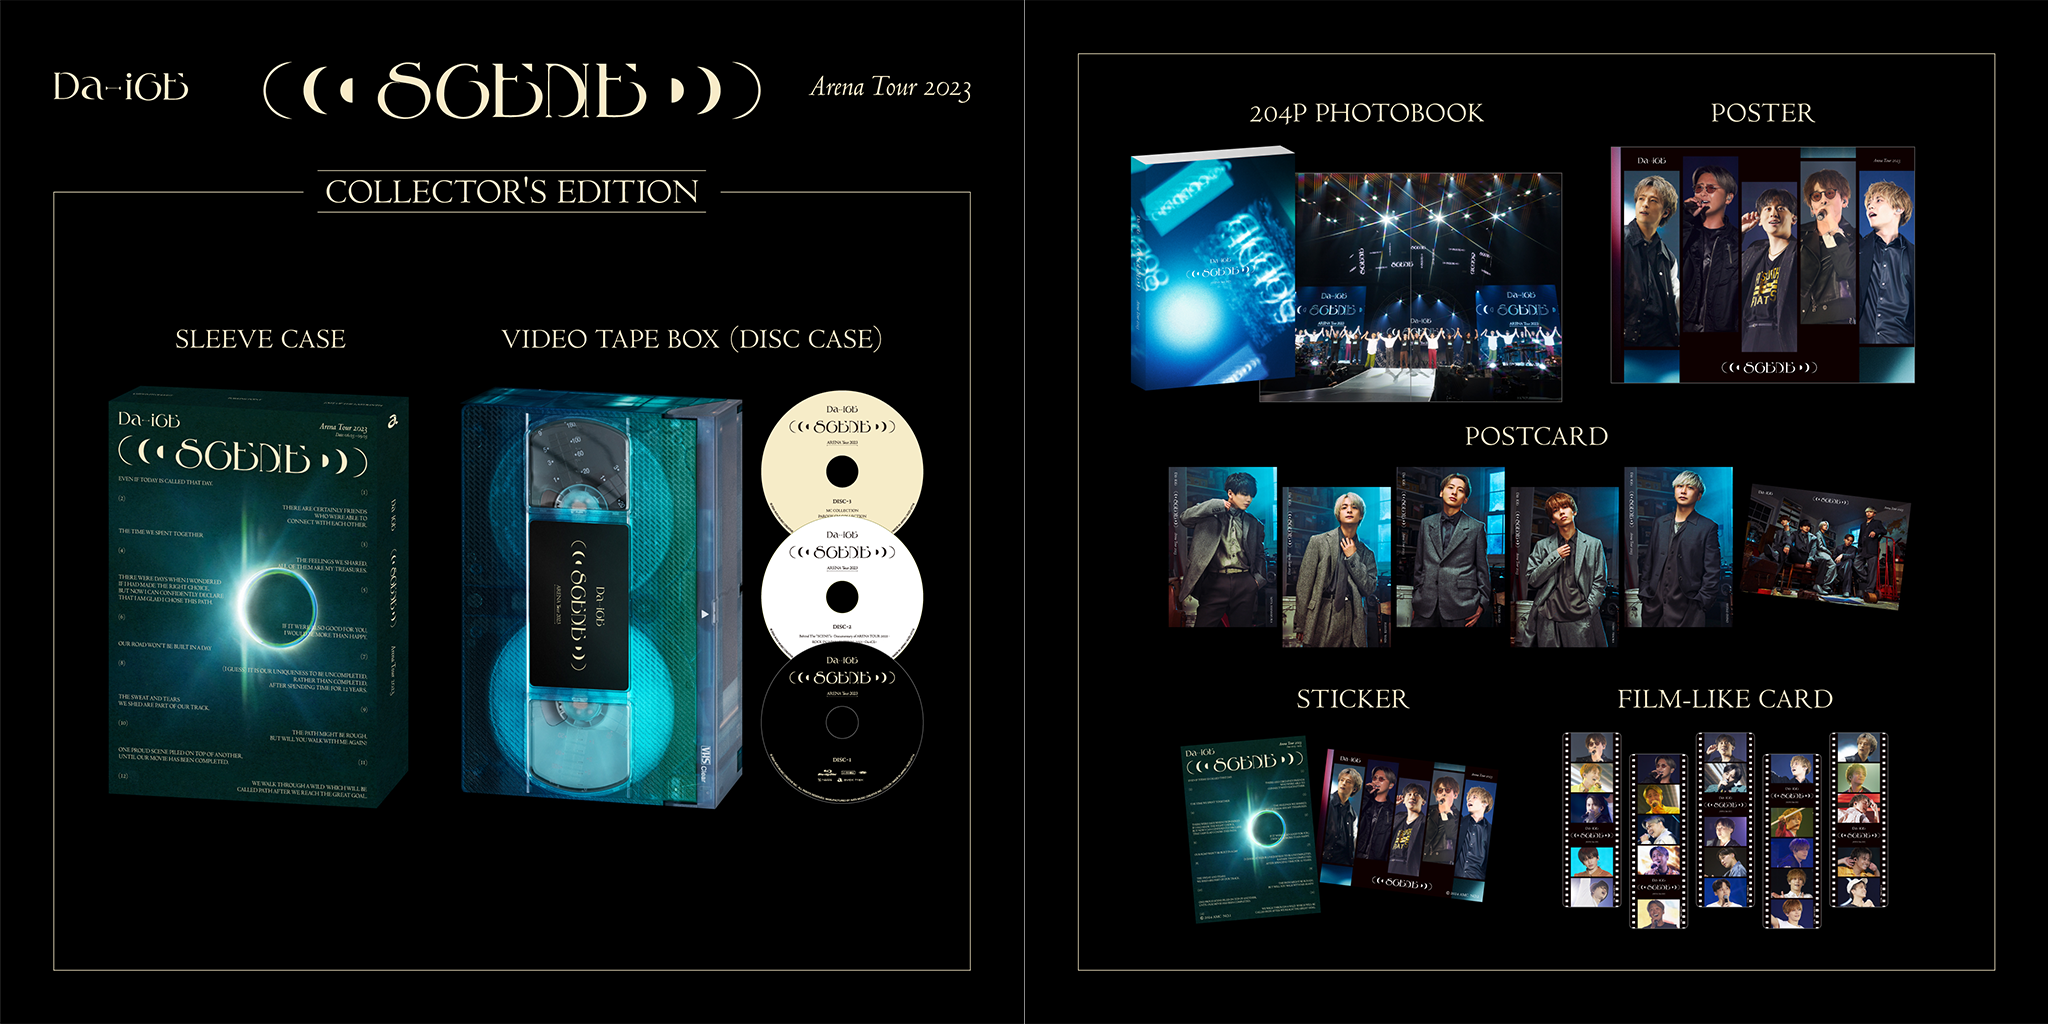 LIVE DVD/Blu-ray “Da-iCE ARENA TOUR 2023 -SCENE-” will be released 